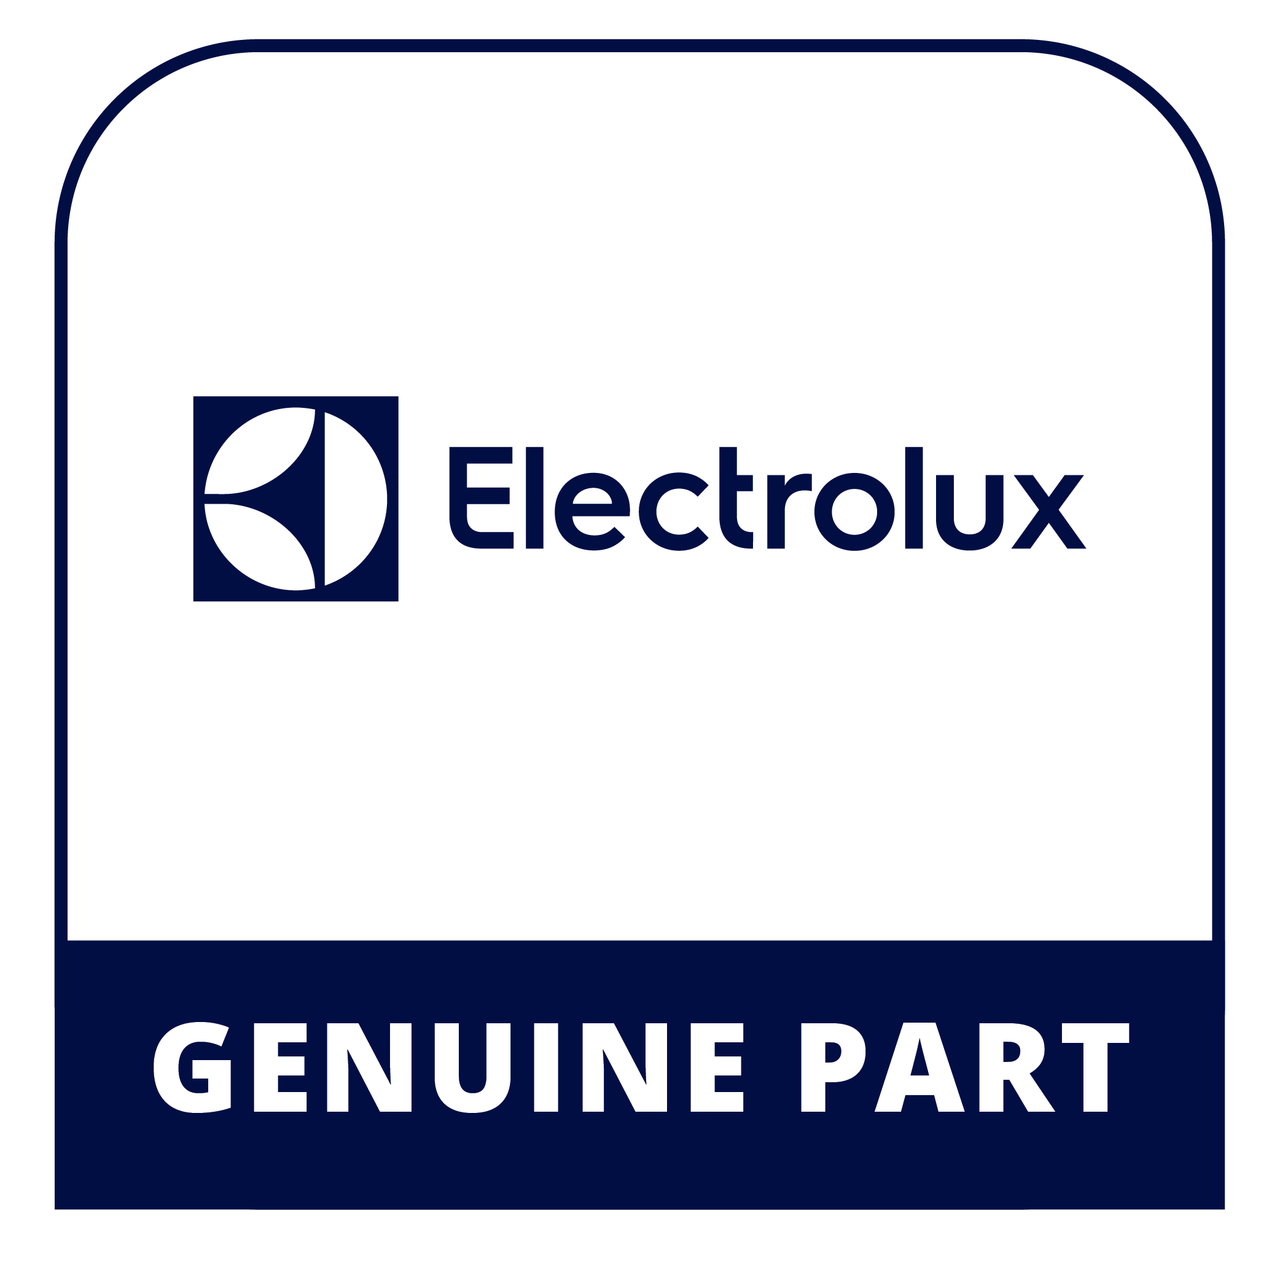 Frigidaire - Electrolux 5304502060 Screen - Genuine Electrolux Part